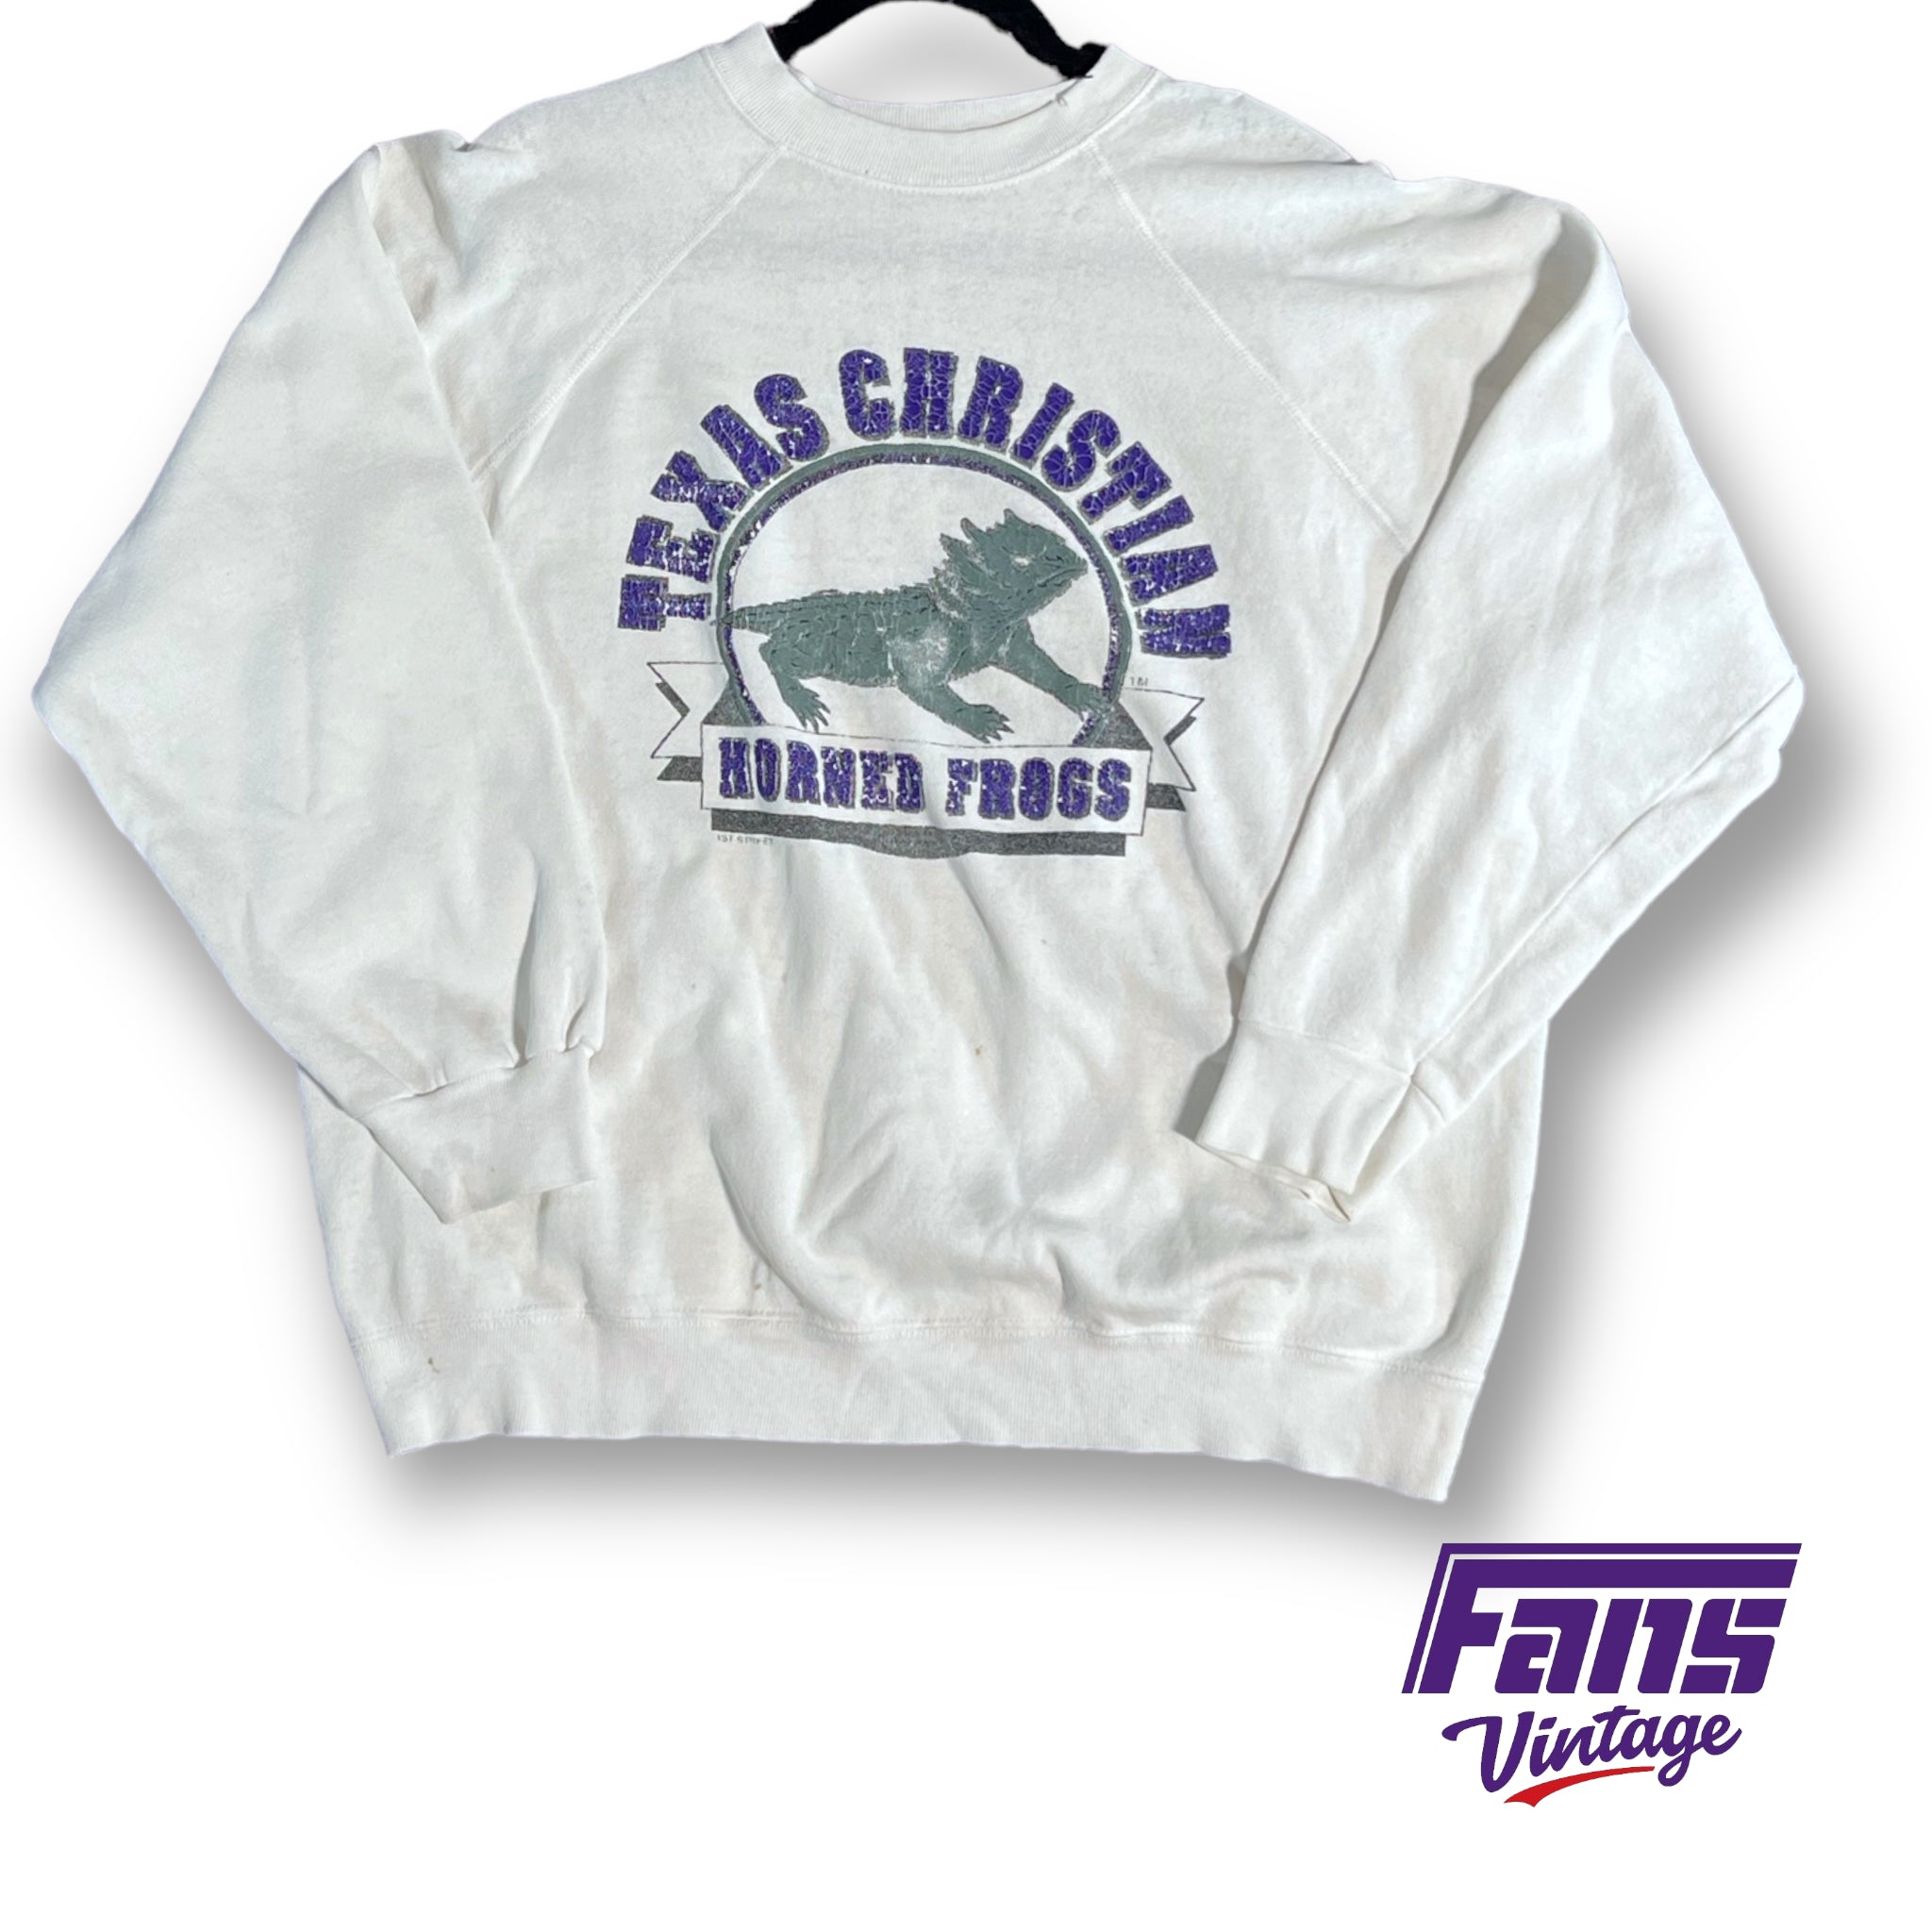 Vintage TCU crewneck sweater – Fans Vintage